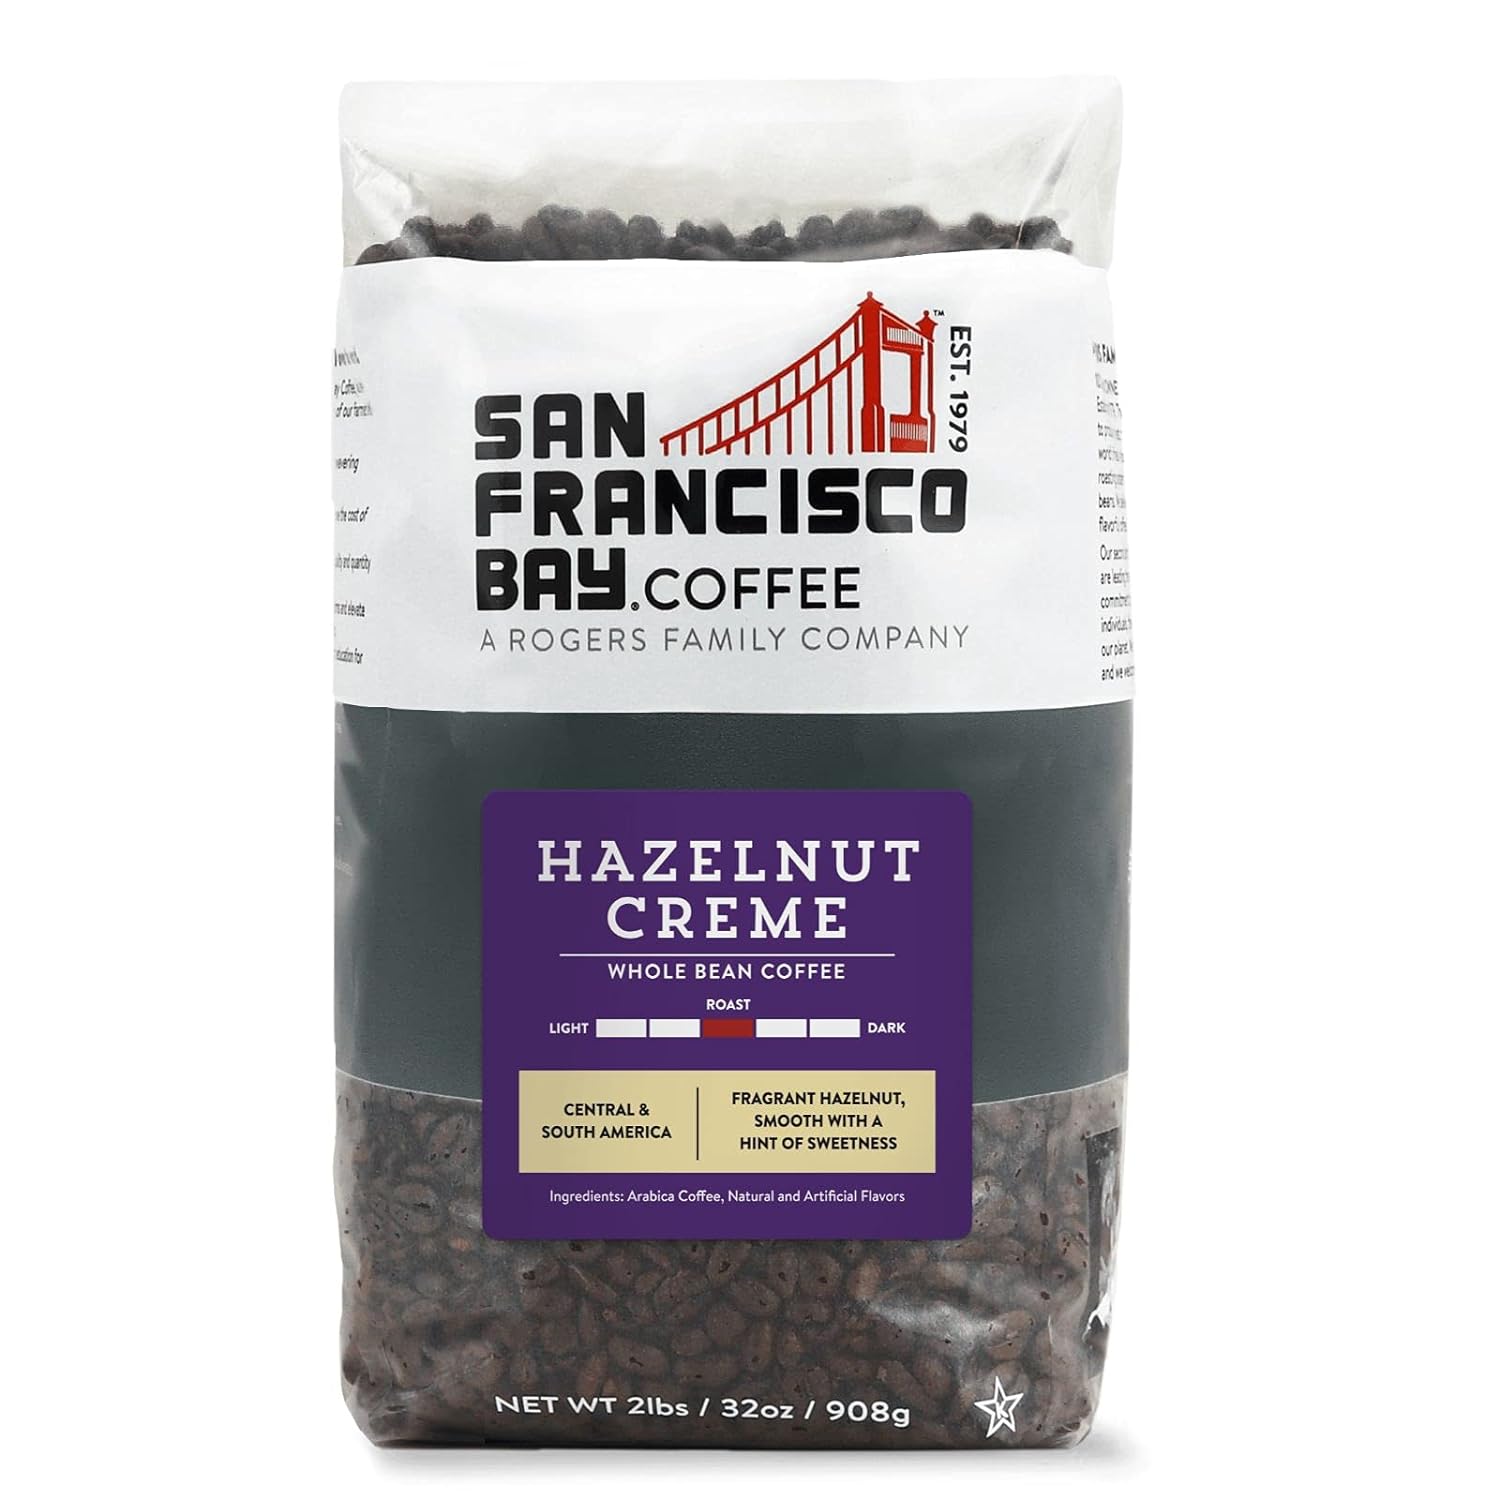 San Francisco Bay Whole Bean Coffee - Hazelnut Crème (2lb Bag), Flavored, Medium Roast